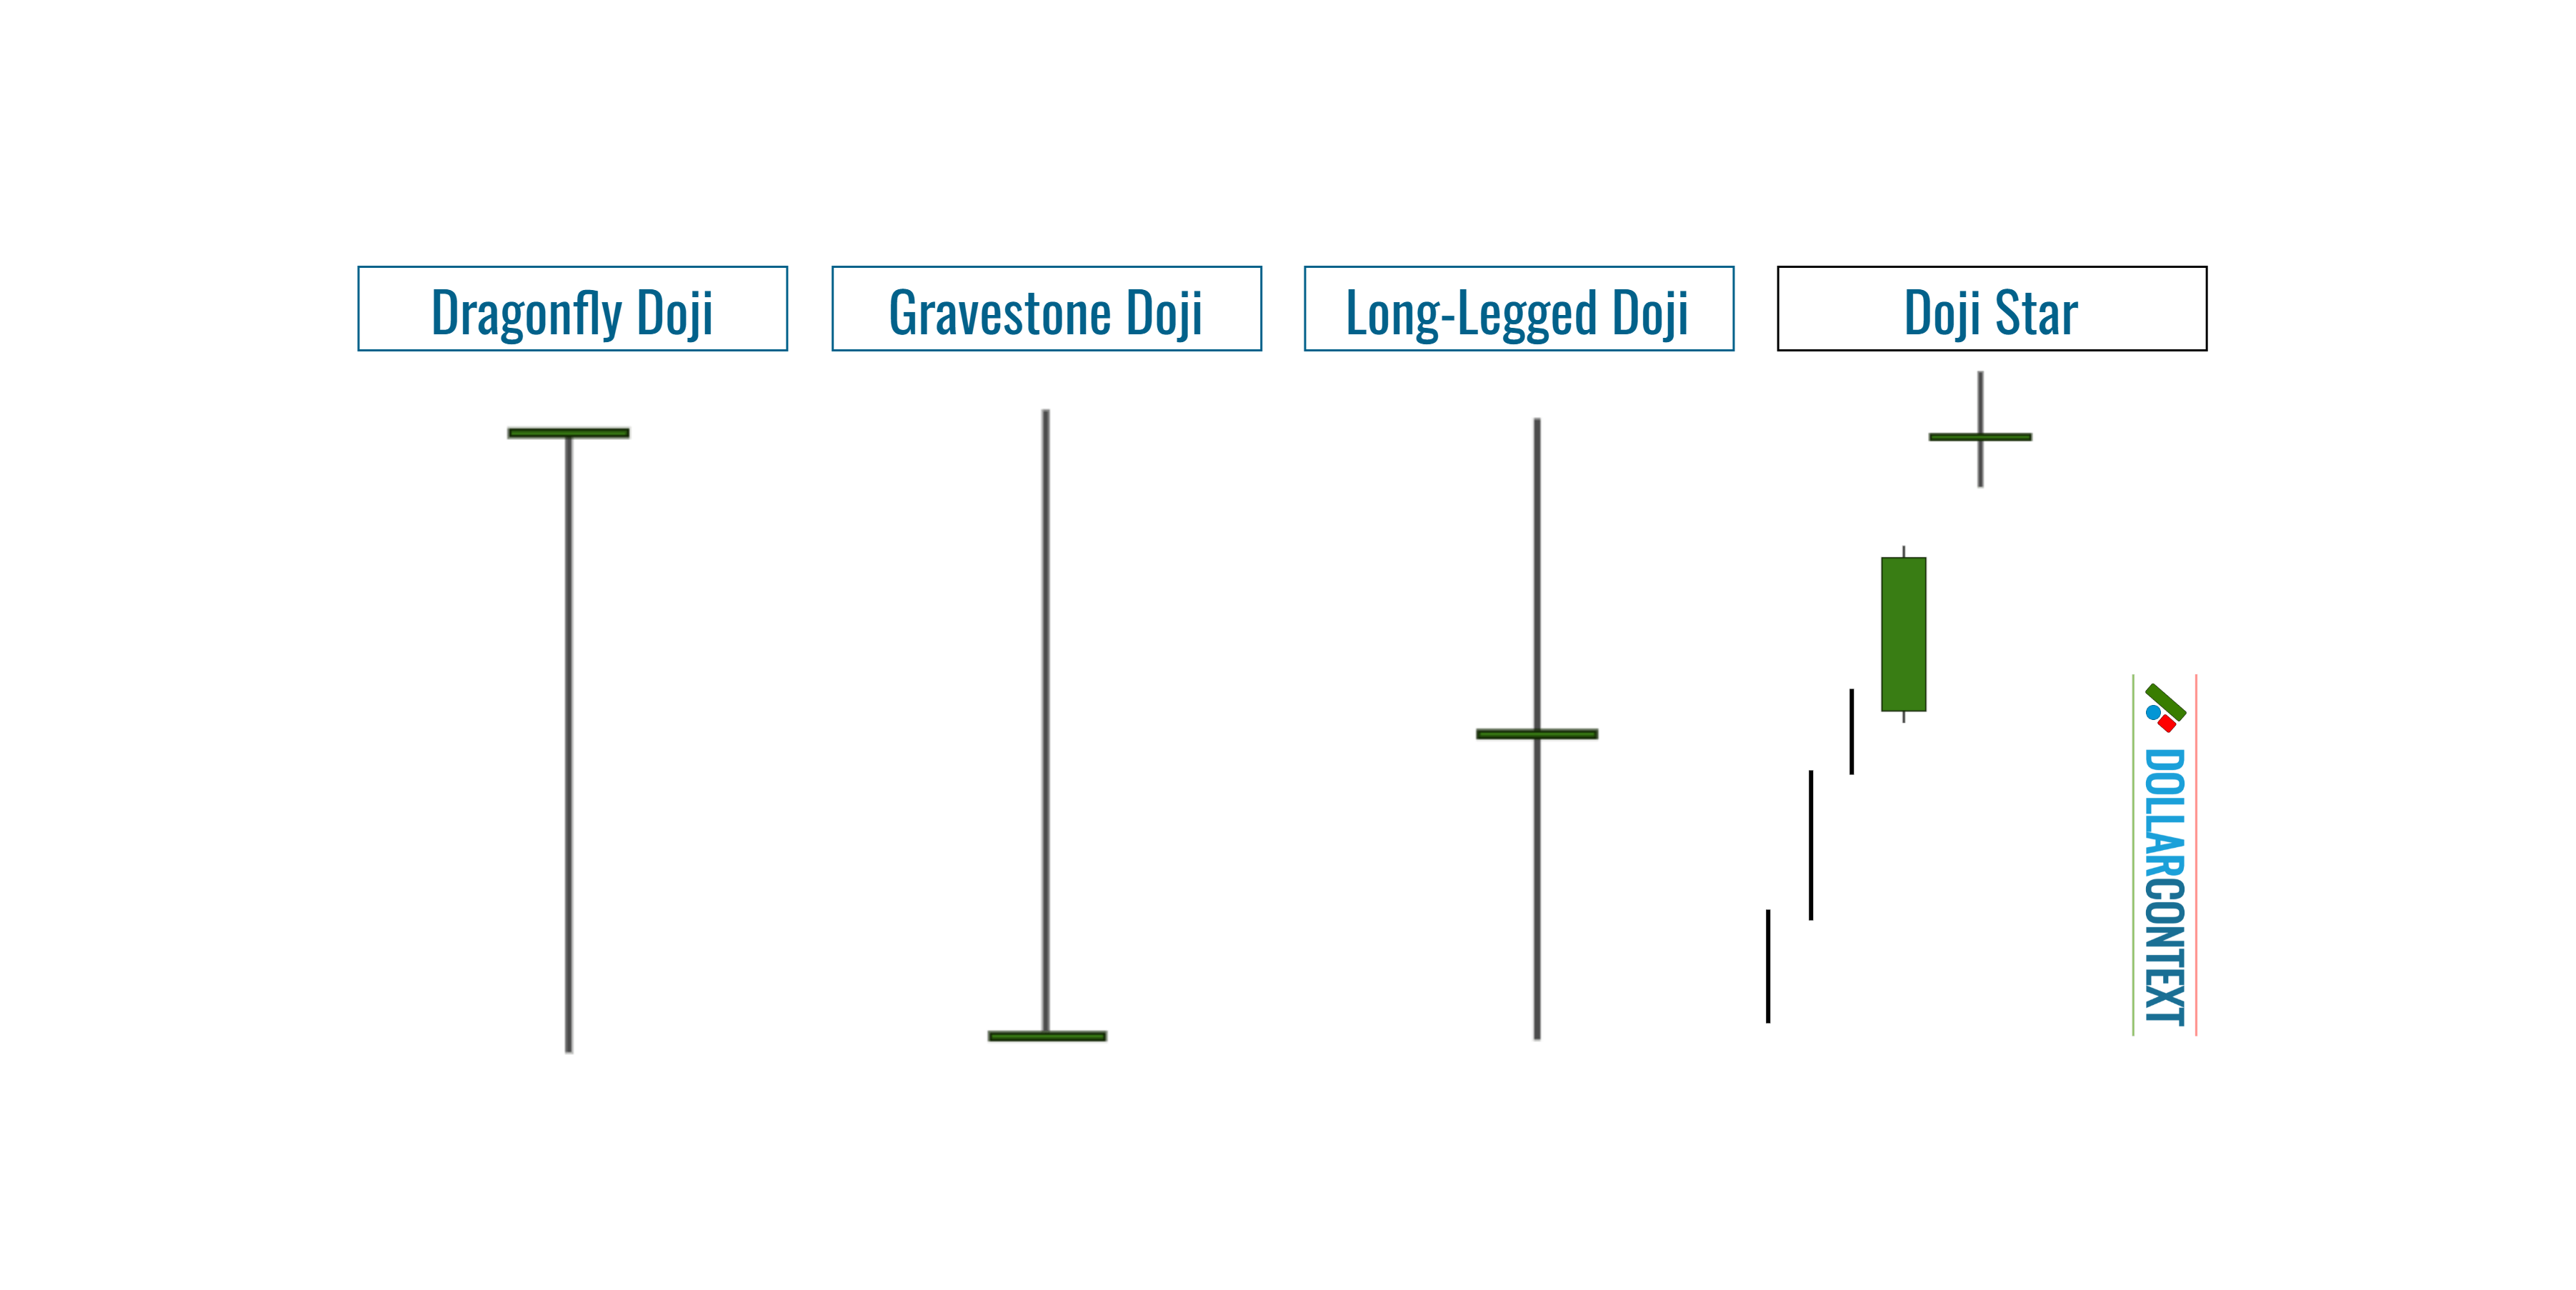 Types of Doji Candlesticks